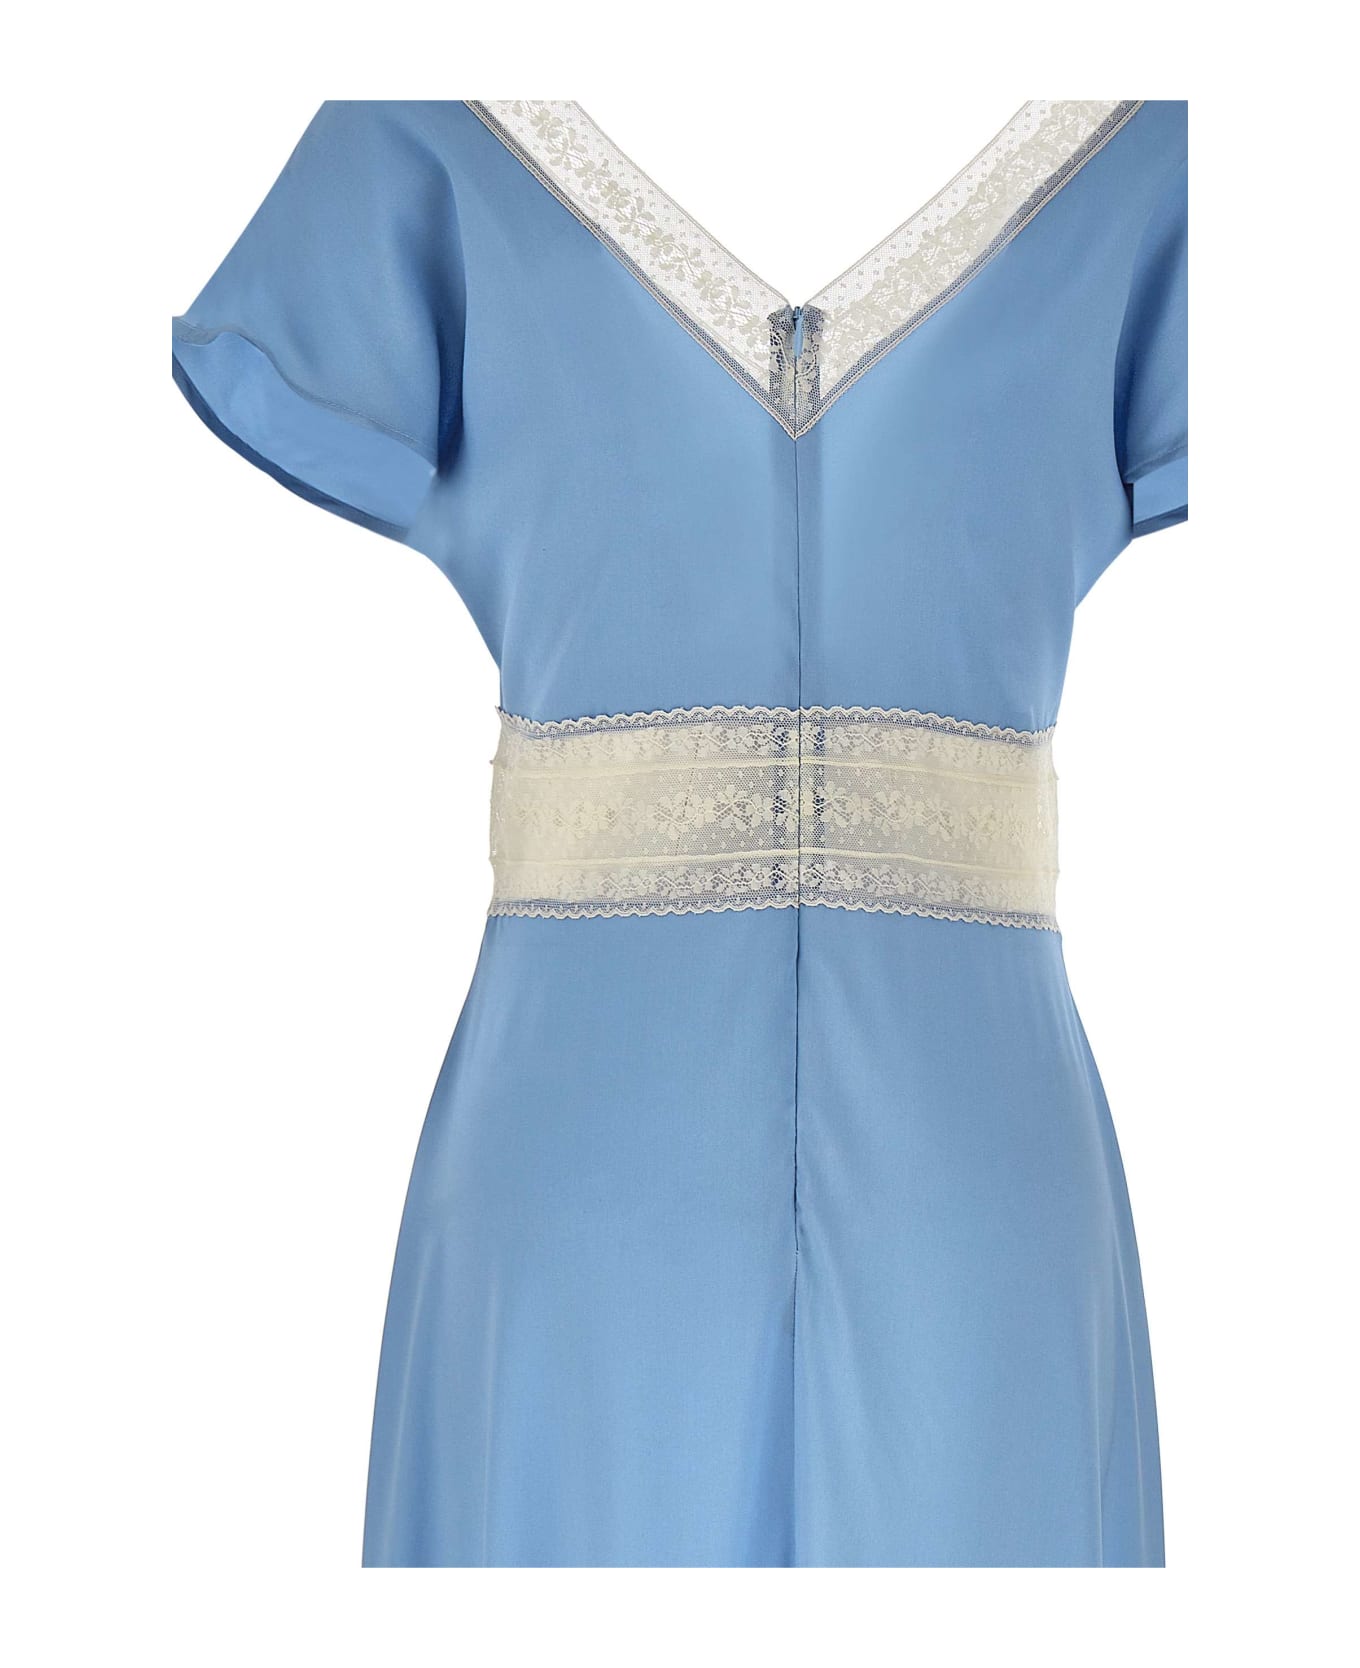 Parosh "sesamo" Silk Dress - LIGHT BLUE